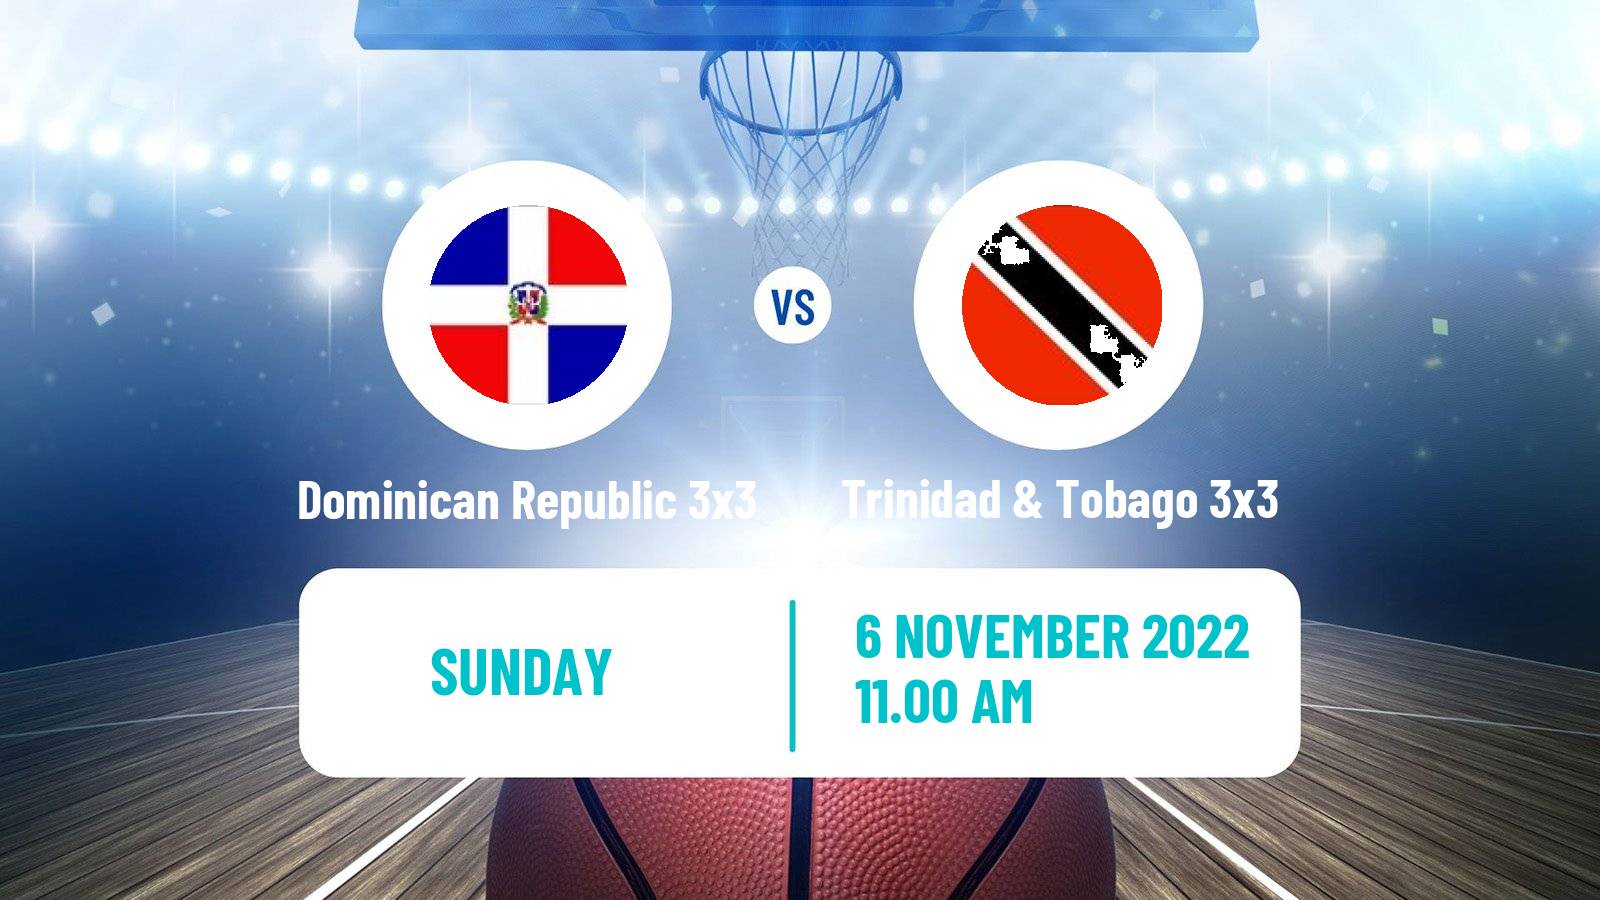 Basketball Americup 3x3 Dominican Republic 3x3 - Trinidad & Tobago 3x3